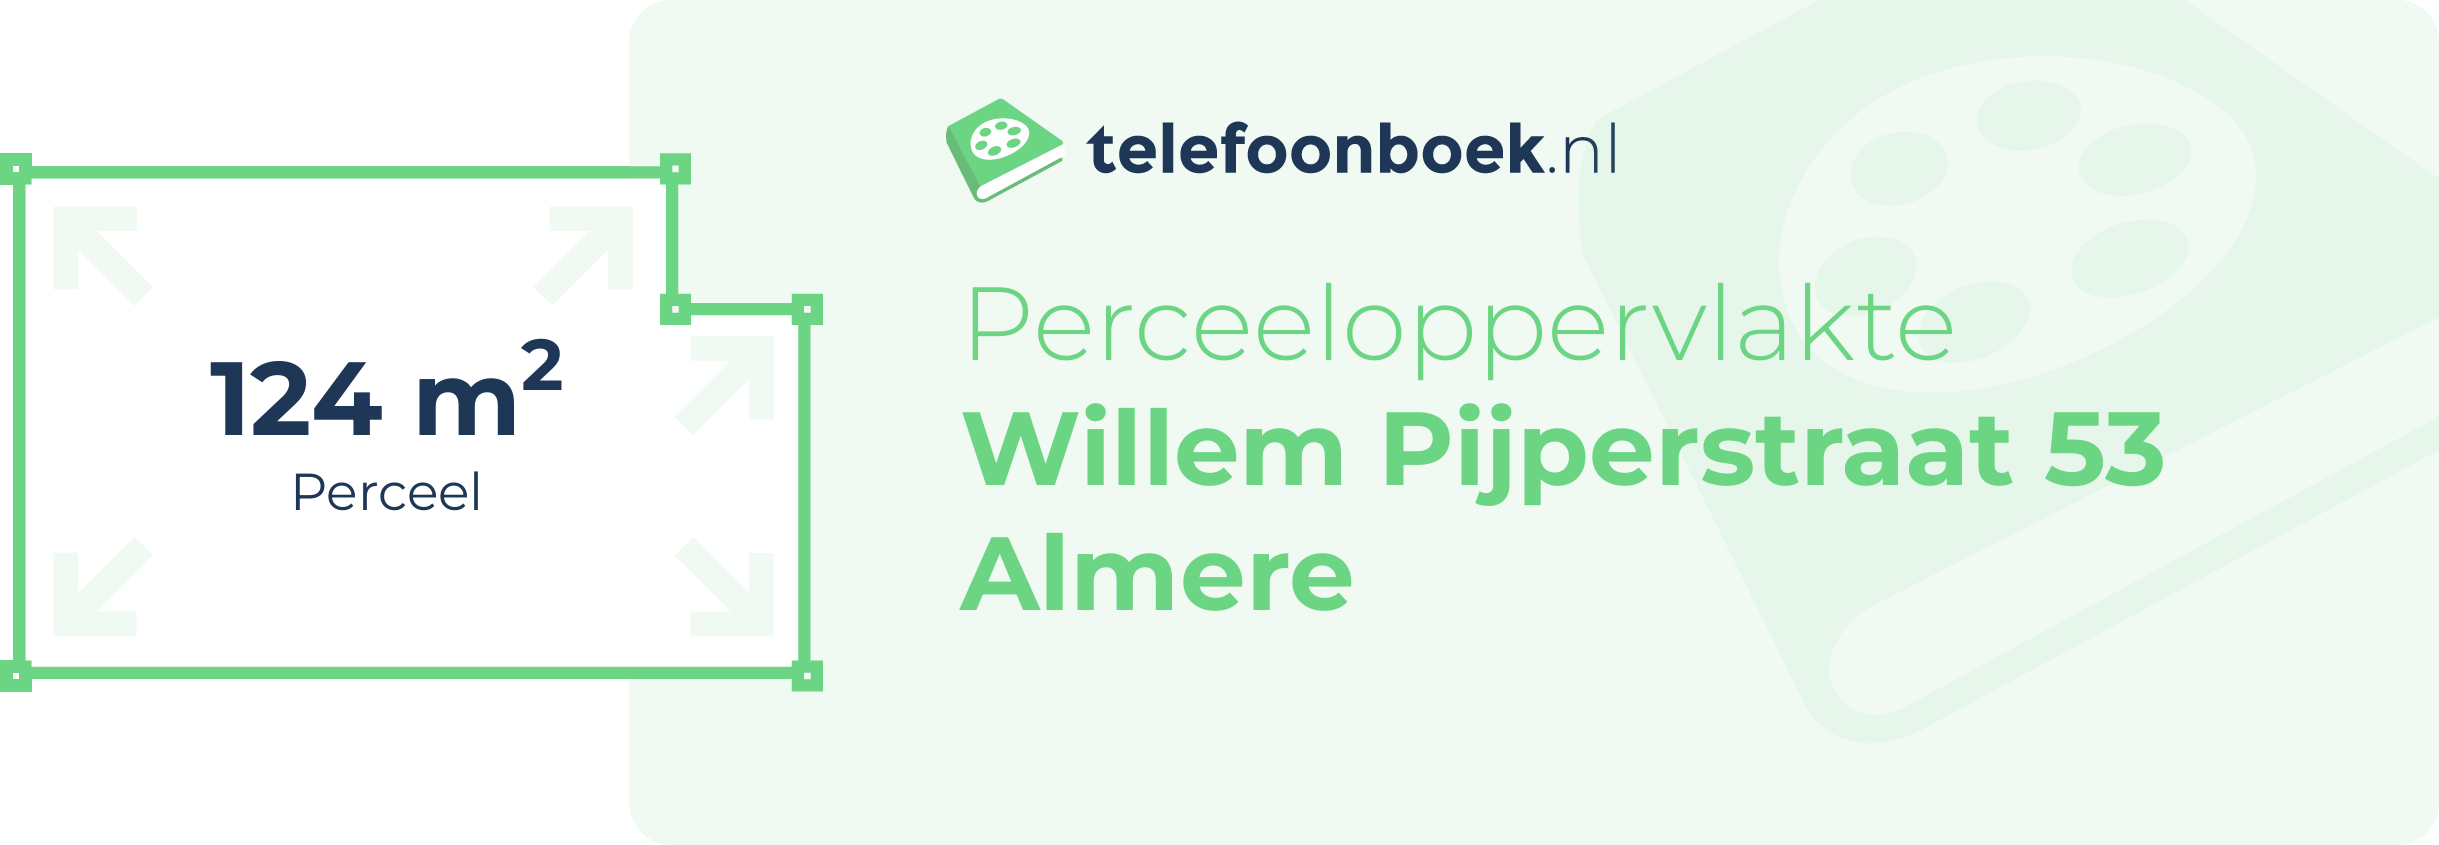 Perceeloppervlakte Willem Pijperstraat 53 Almere